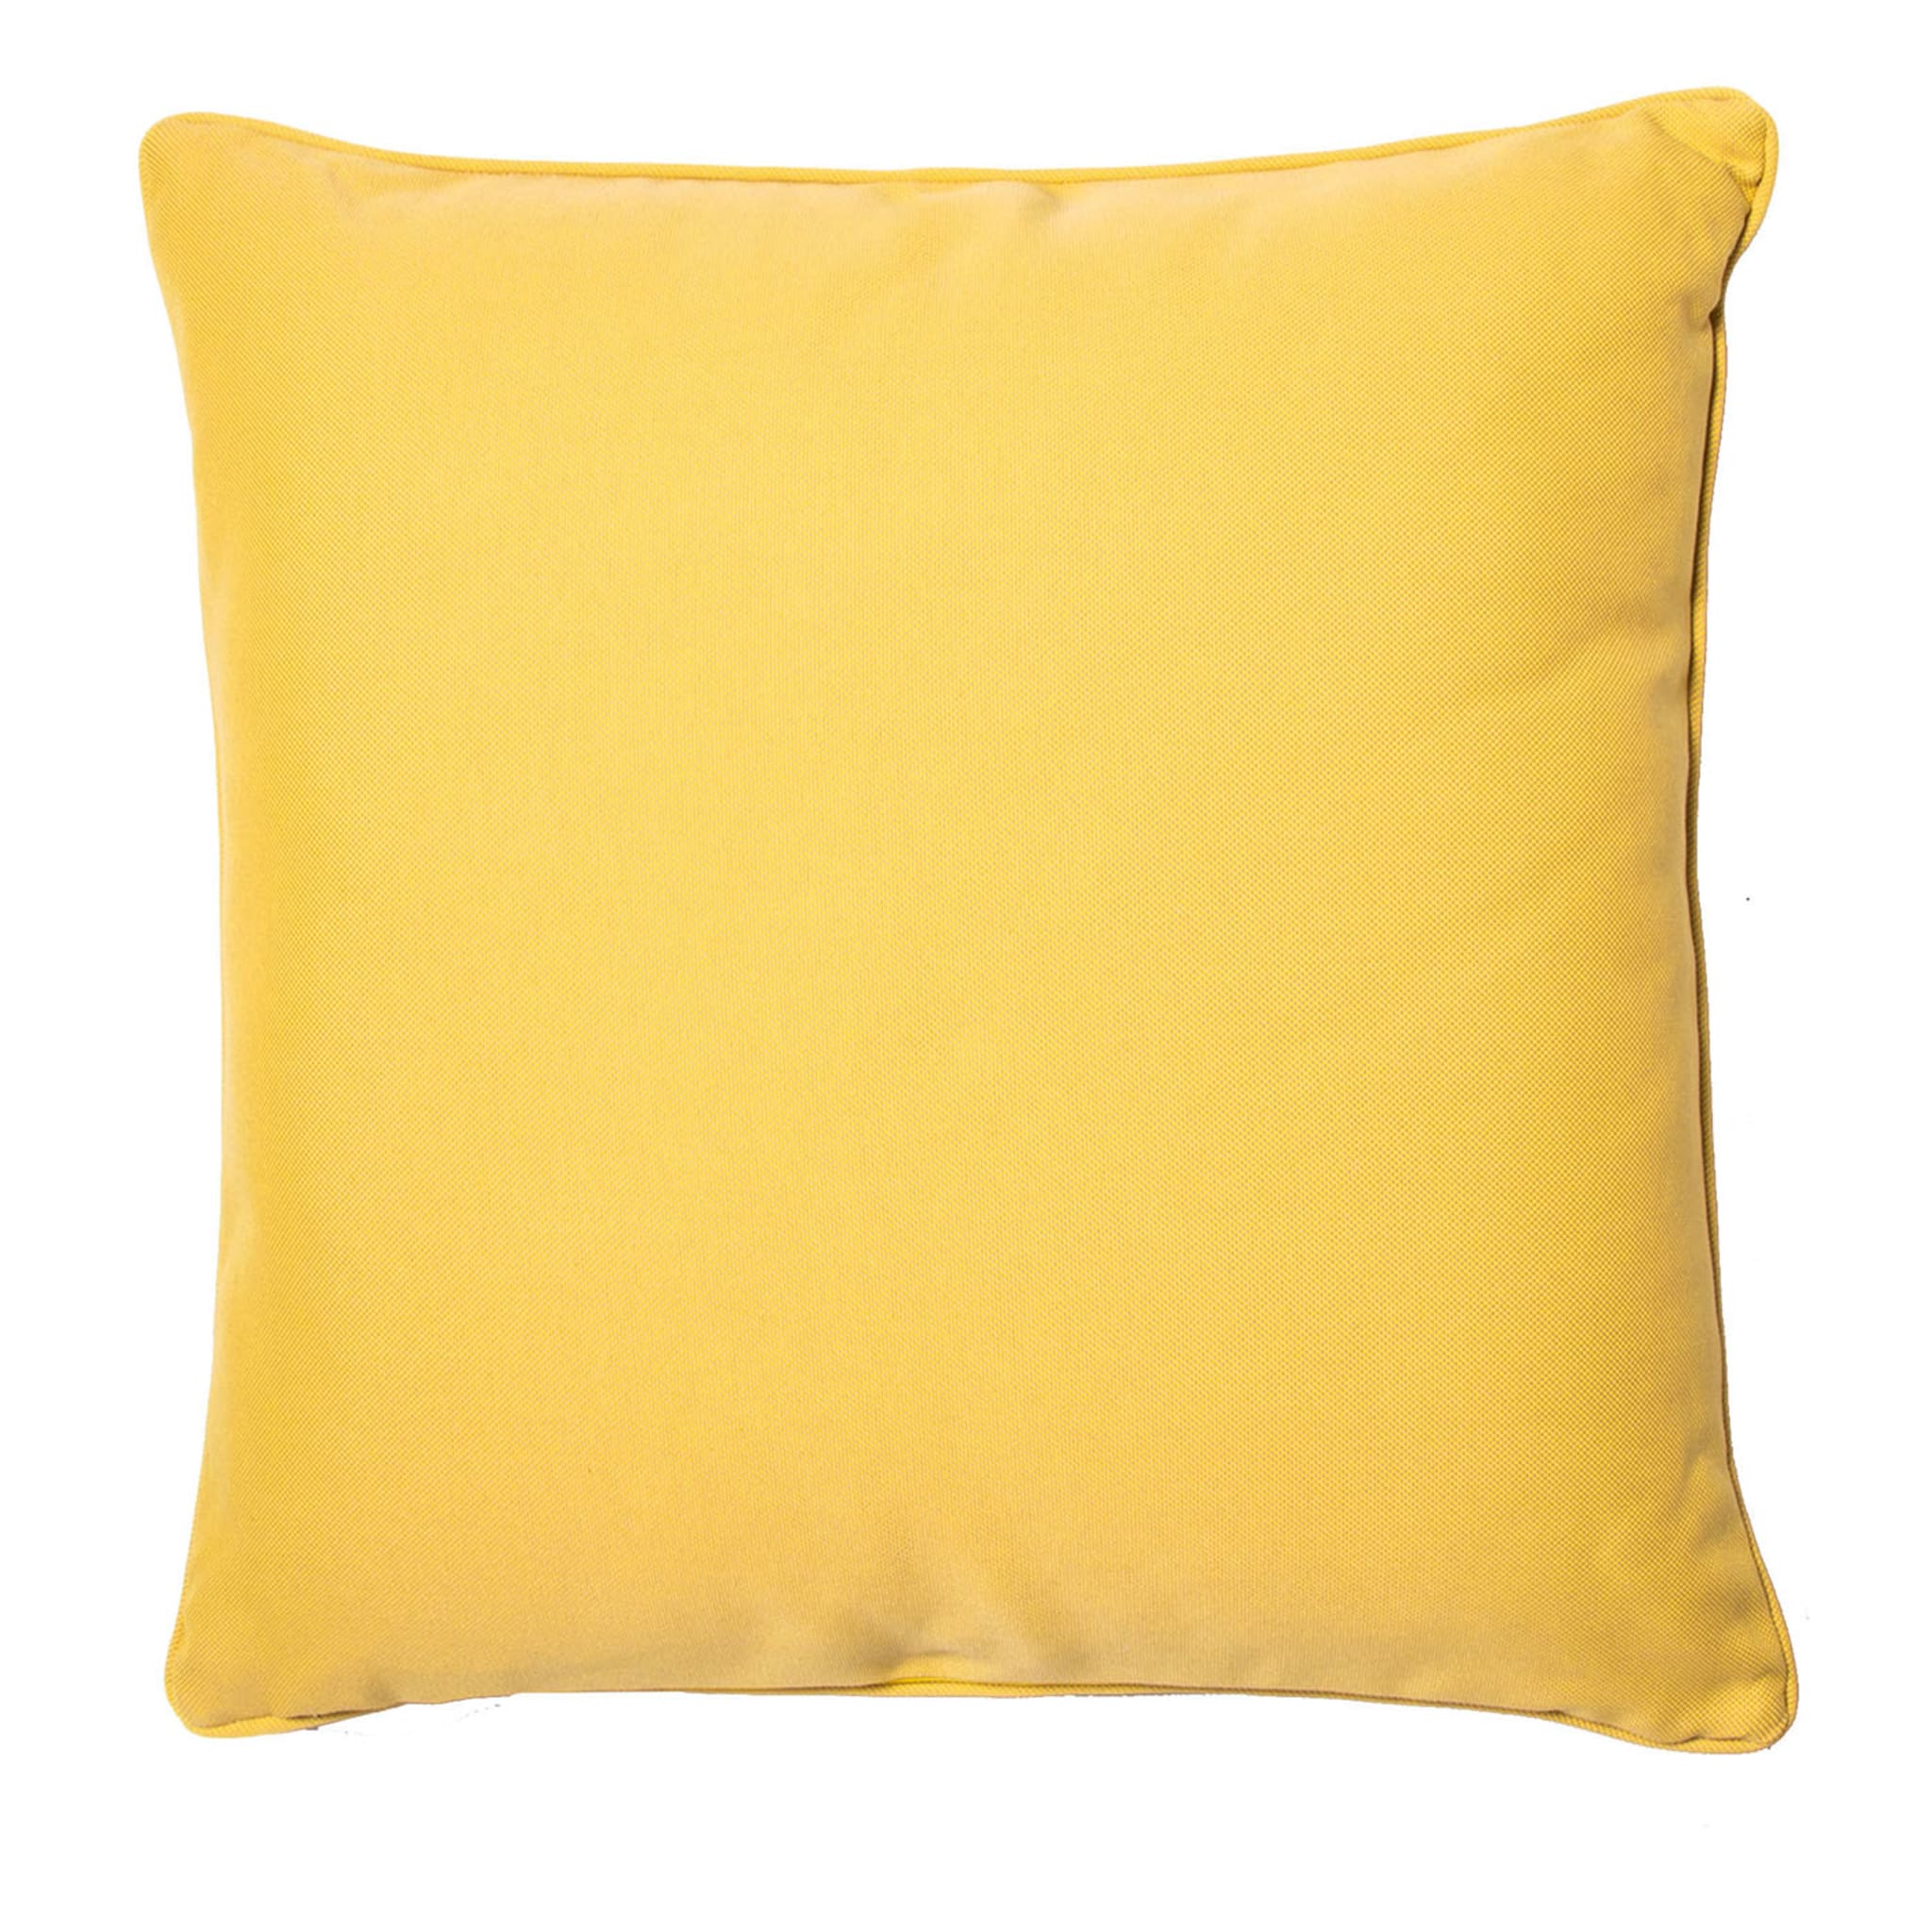 Mia Lemon Waterproof Large Cushion by Luciana Gomez - Alternative view 1